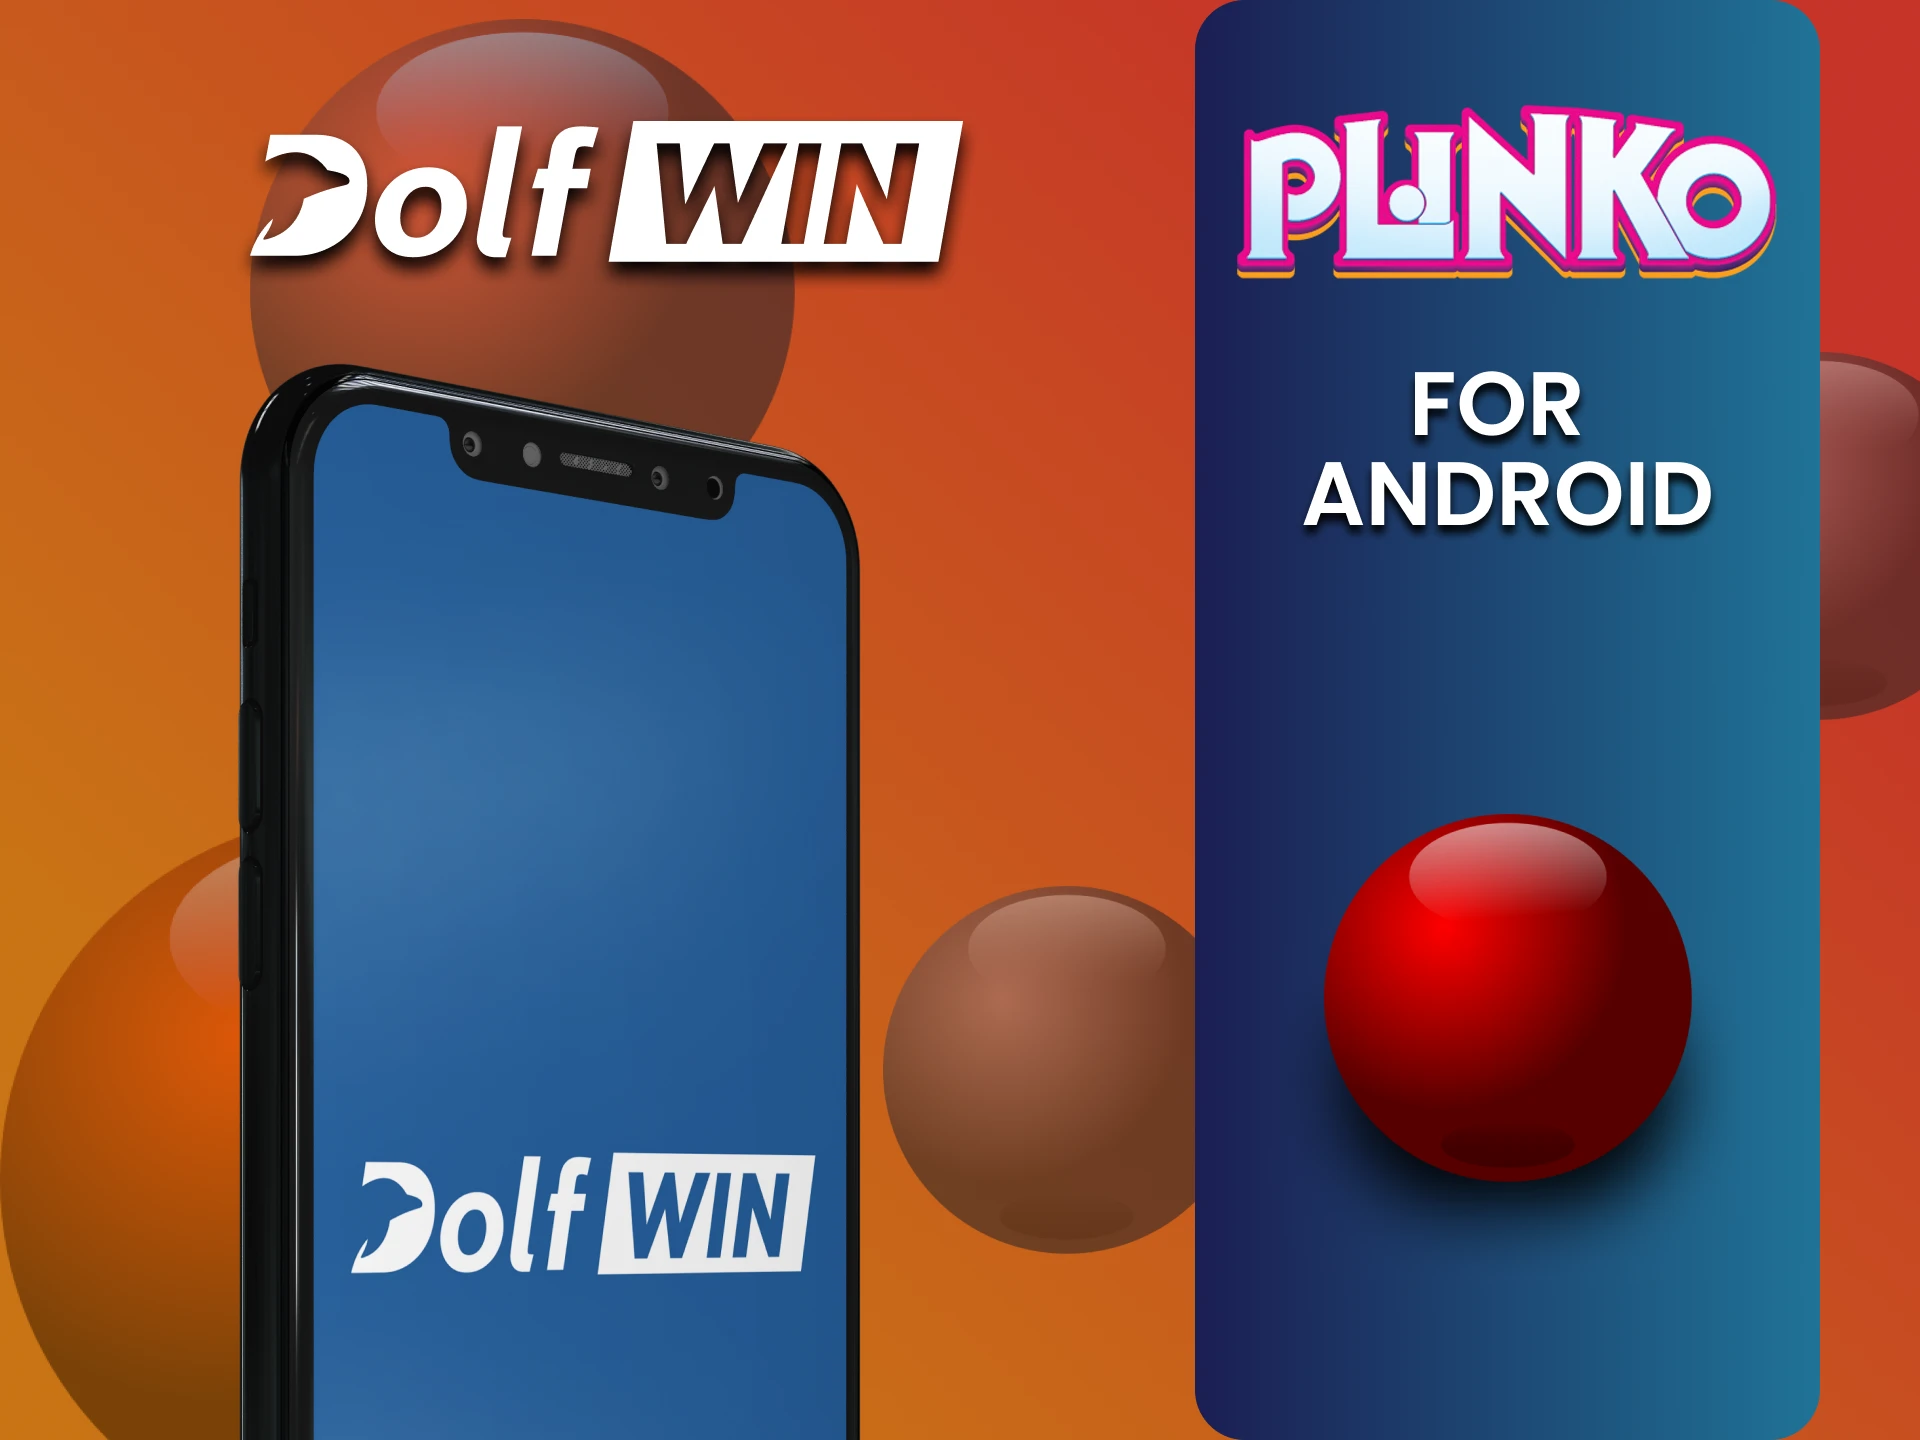 Install the Dolfwin app on Android to play Plinko.